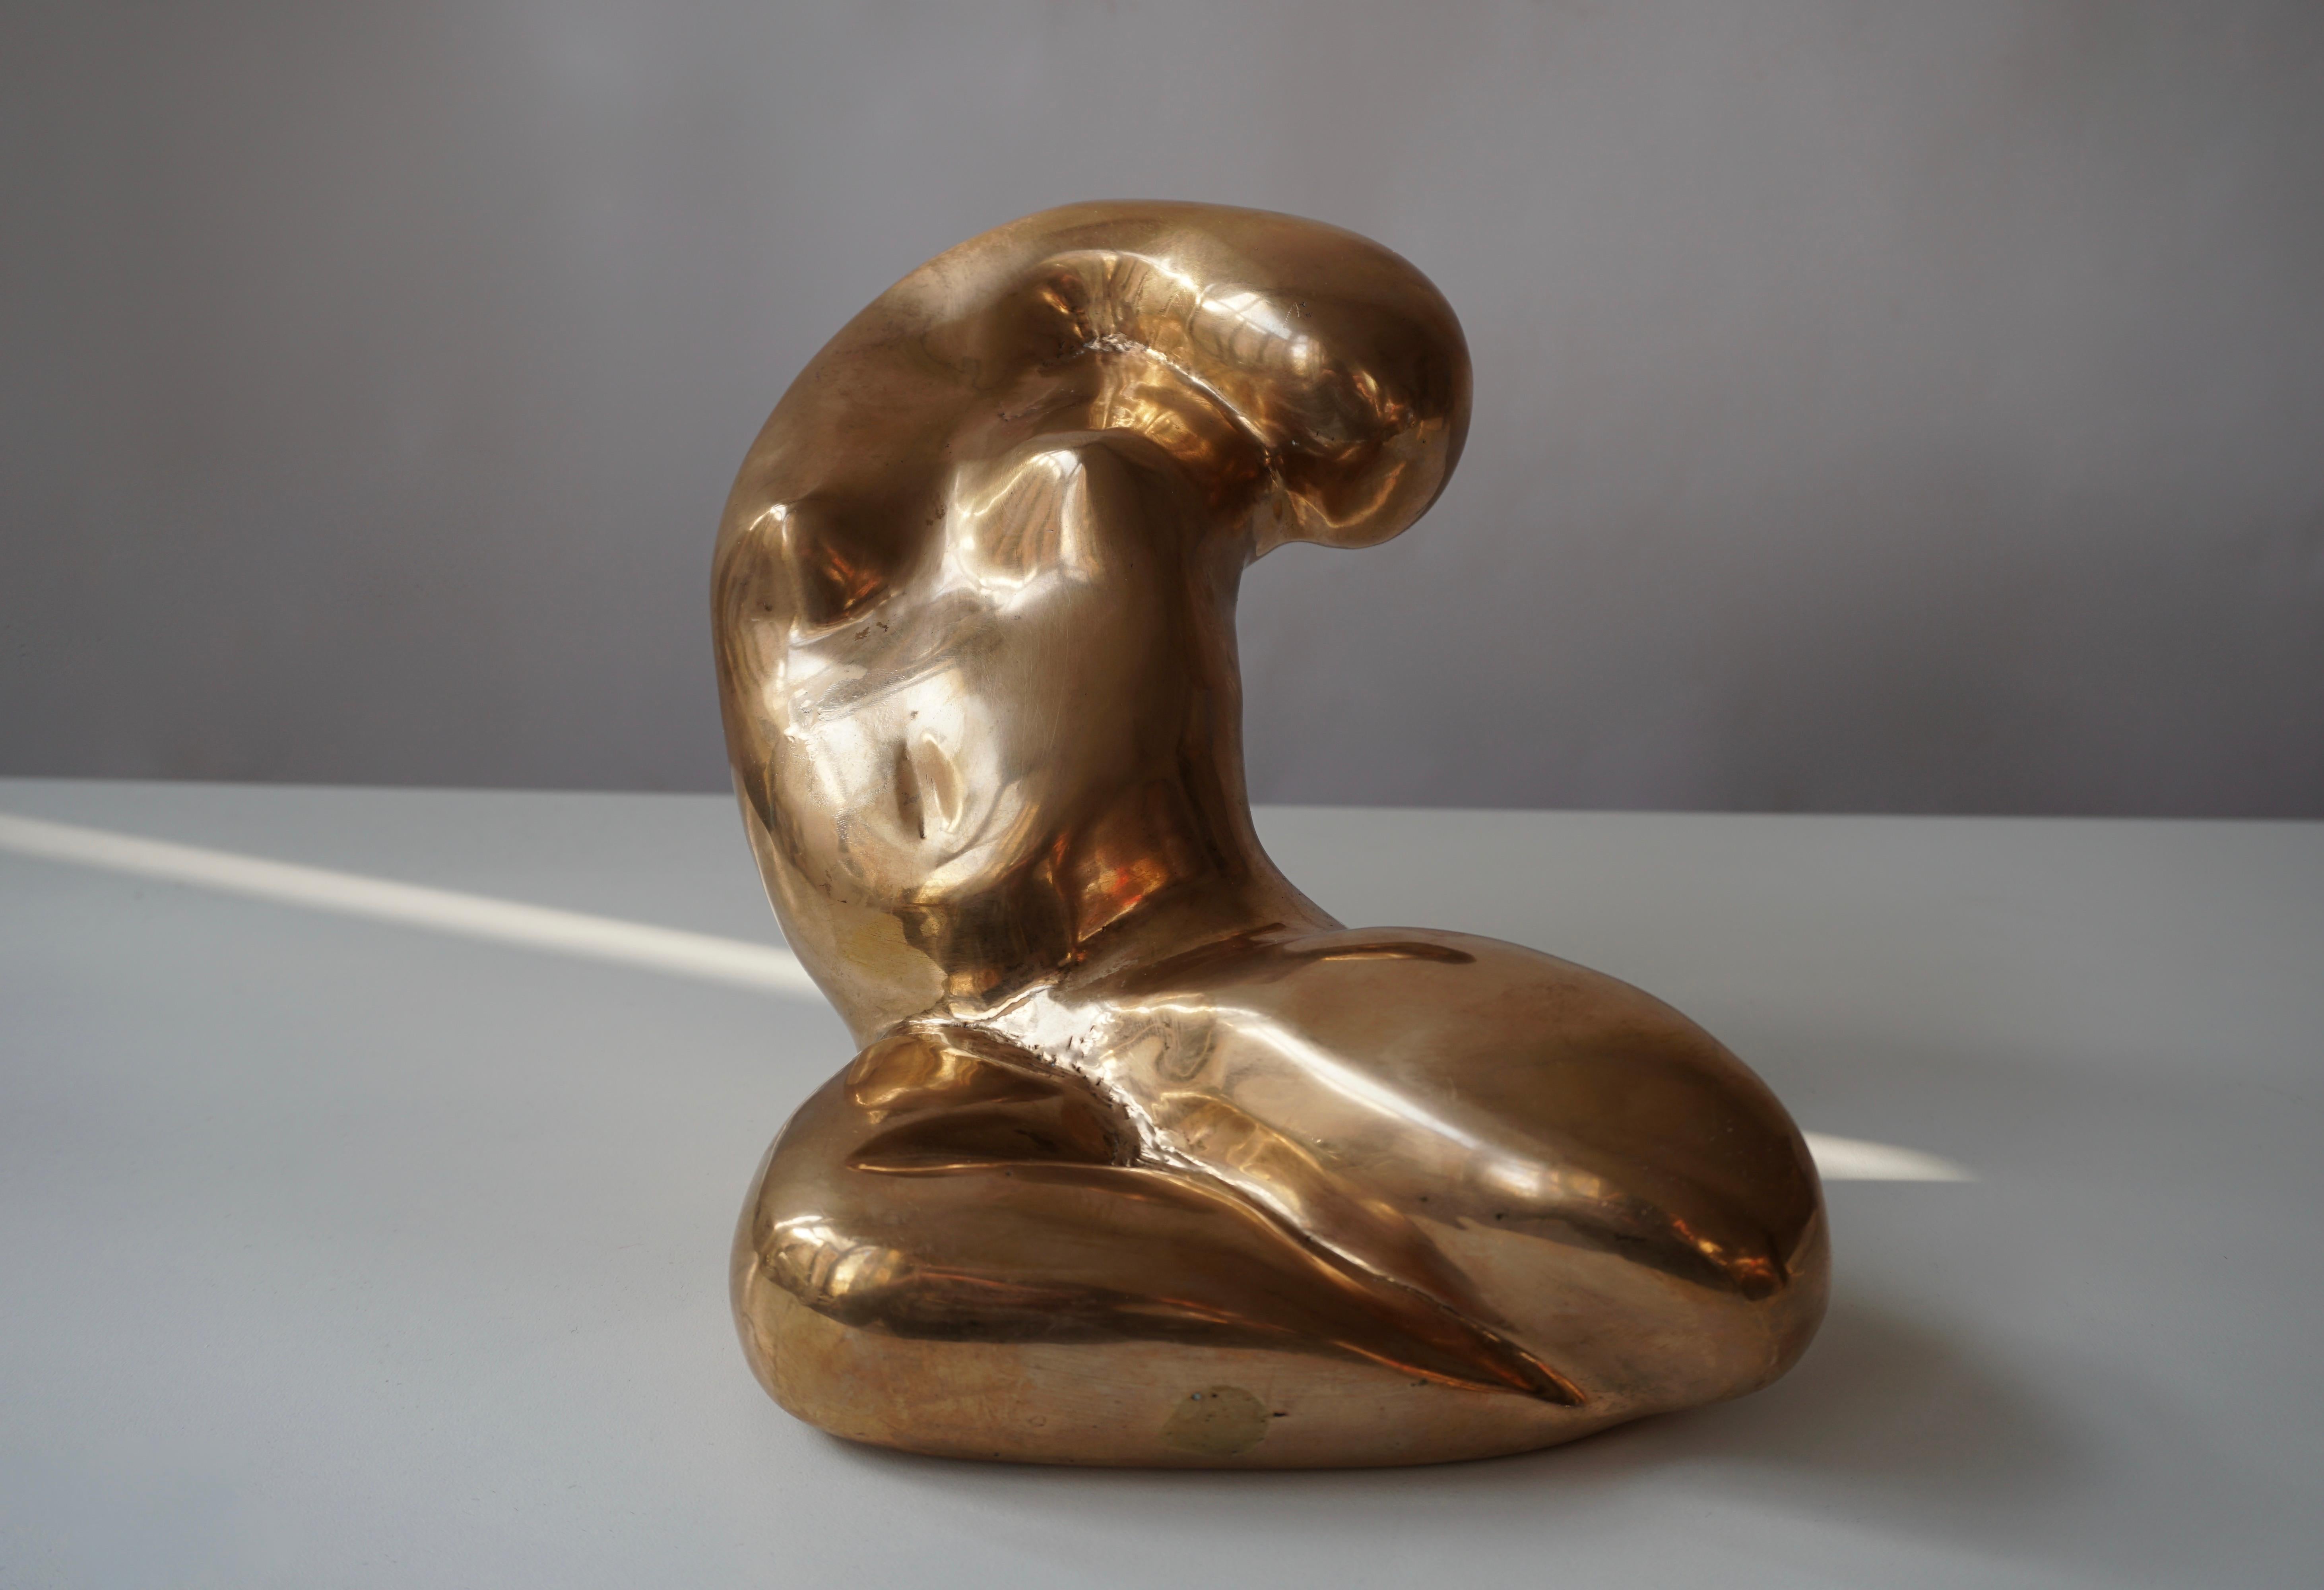 Bronze sculpture of female nude, not signed.
Measures: Height 18 cm.
Width 21 cm.
Depth 22 cm.
Weight 3 kg.